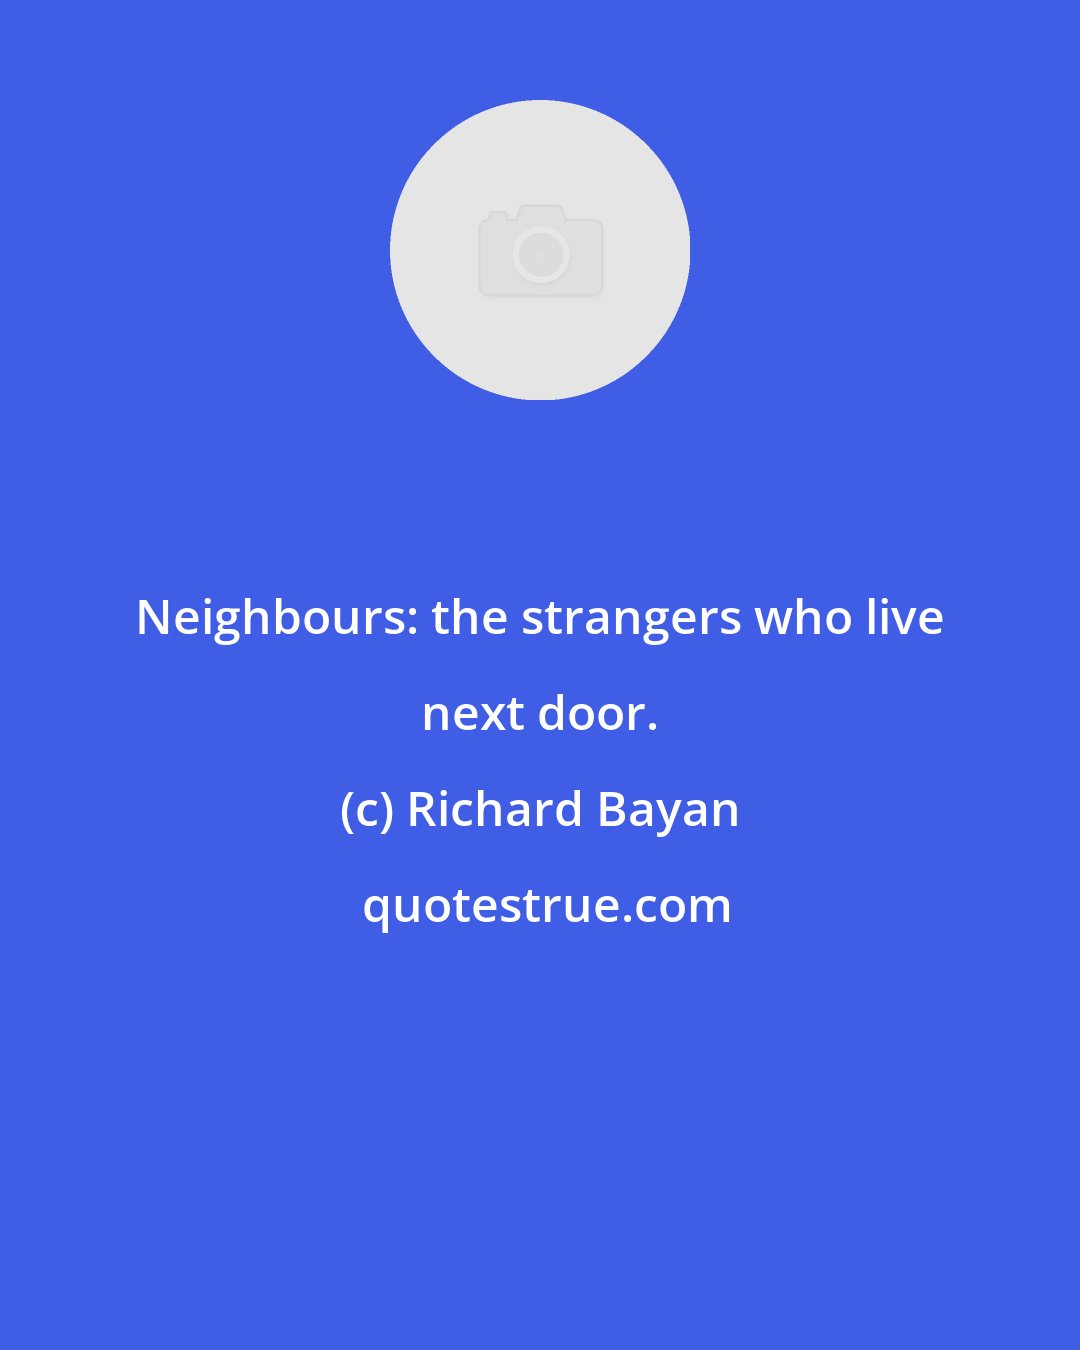 Richard Bayan: Neighbours: the strangers who live next door.